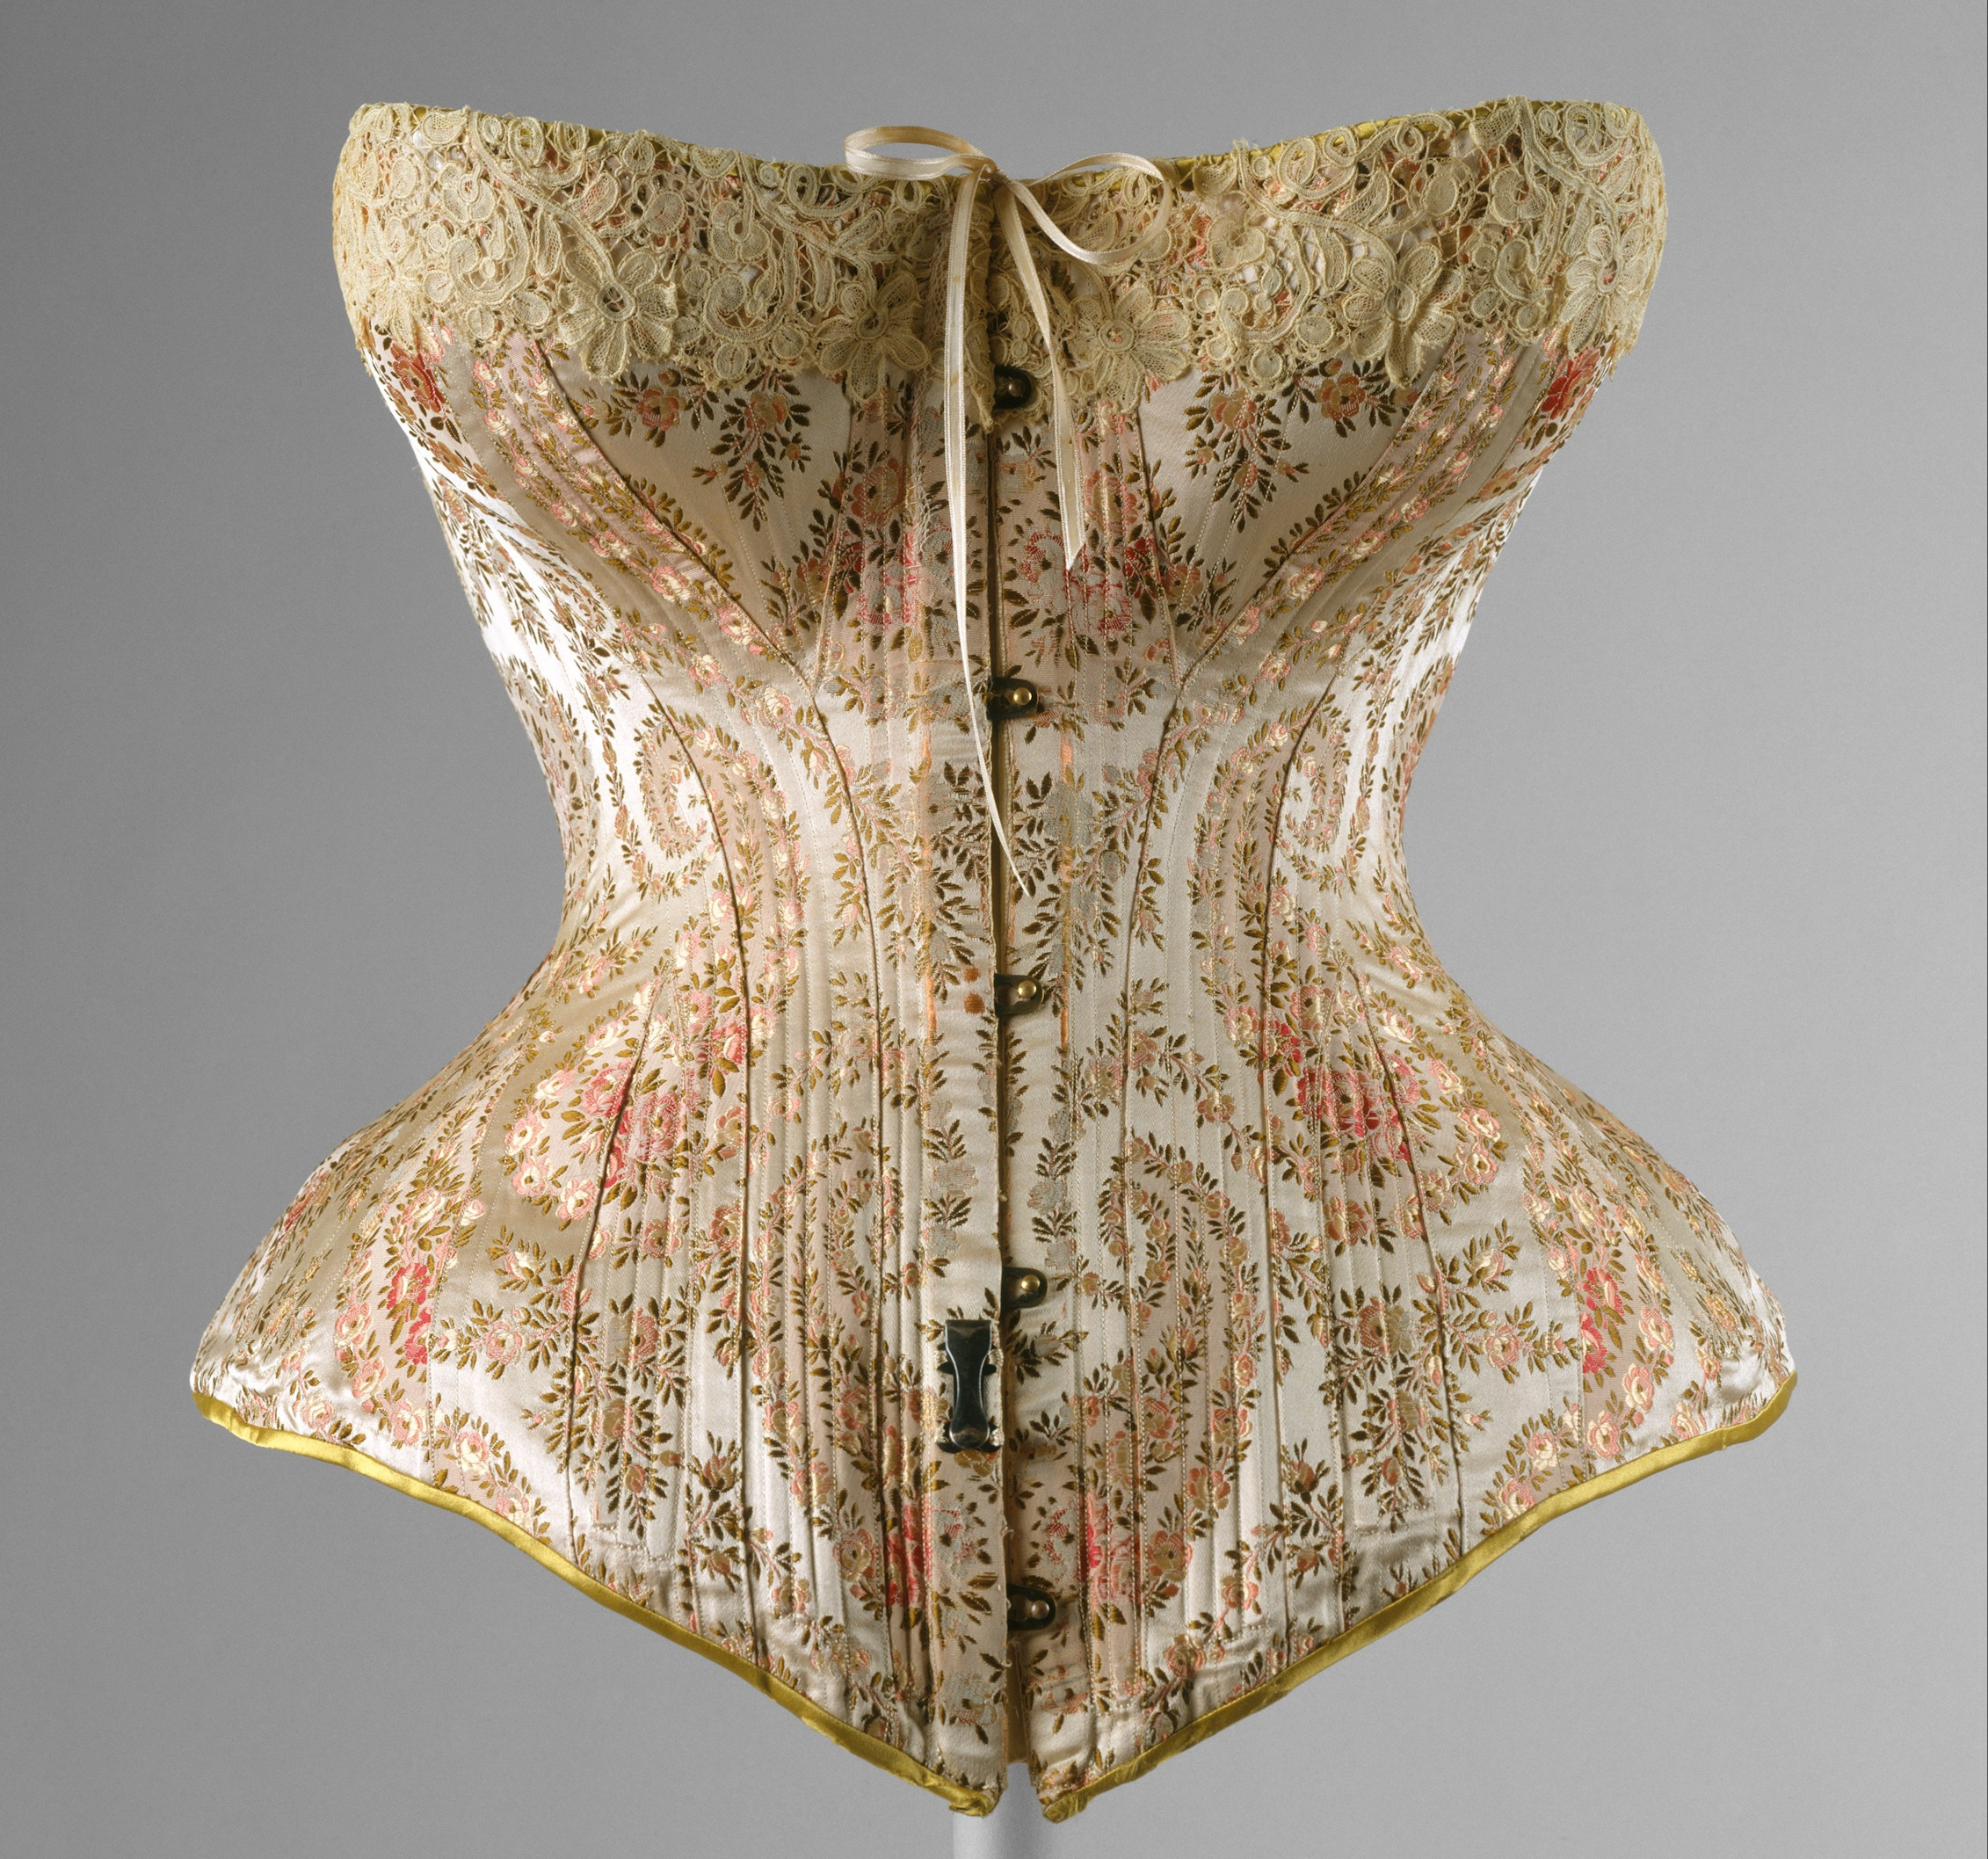 A beautiful corset, with a tiny waist.